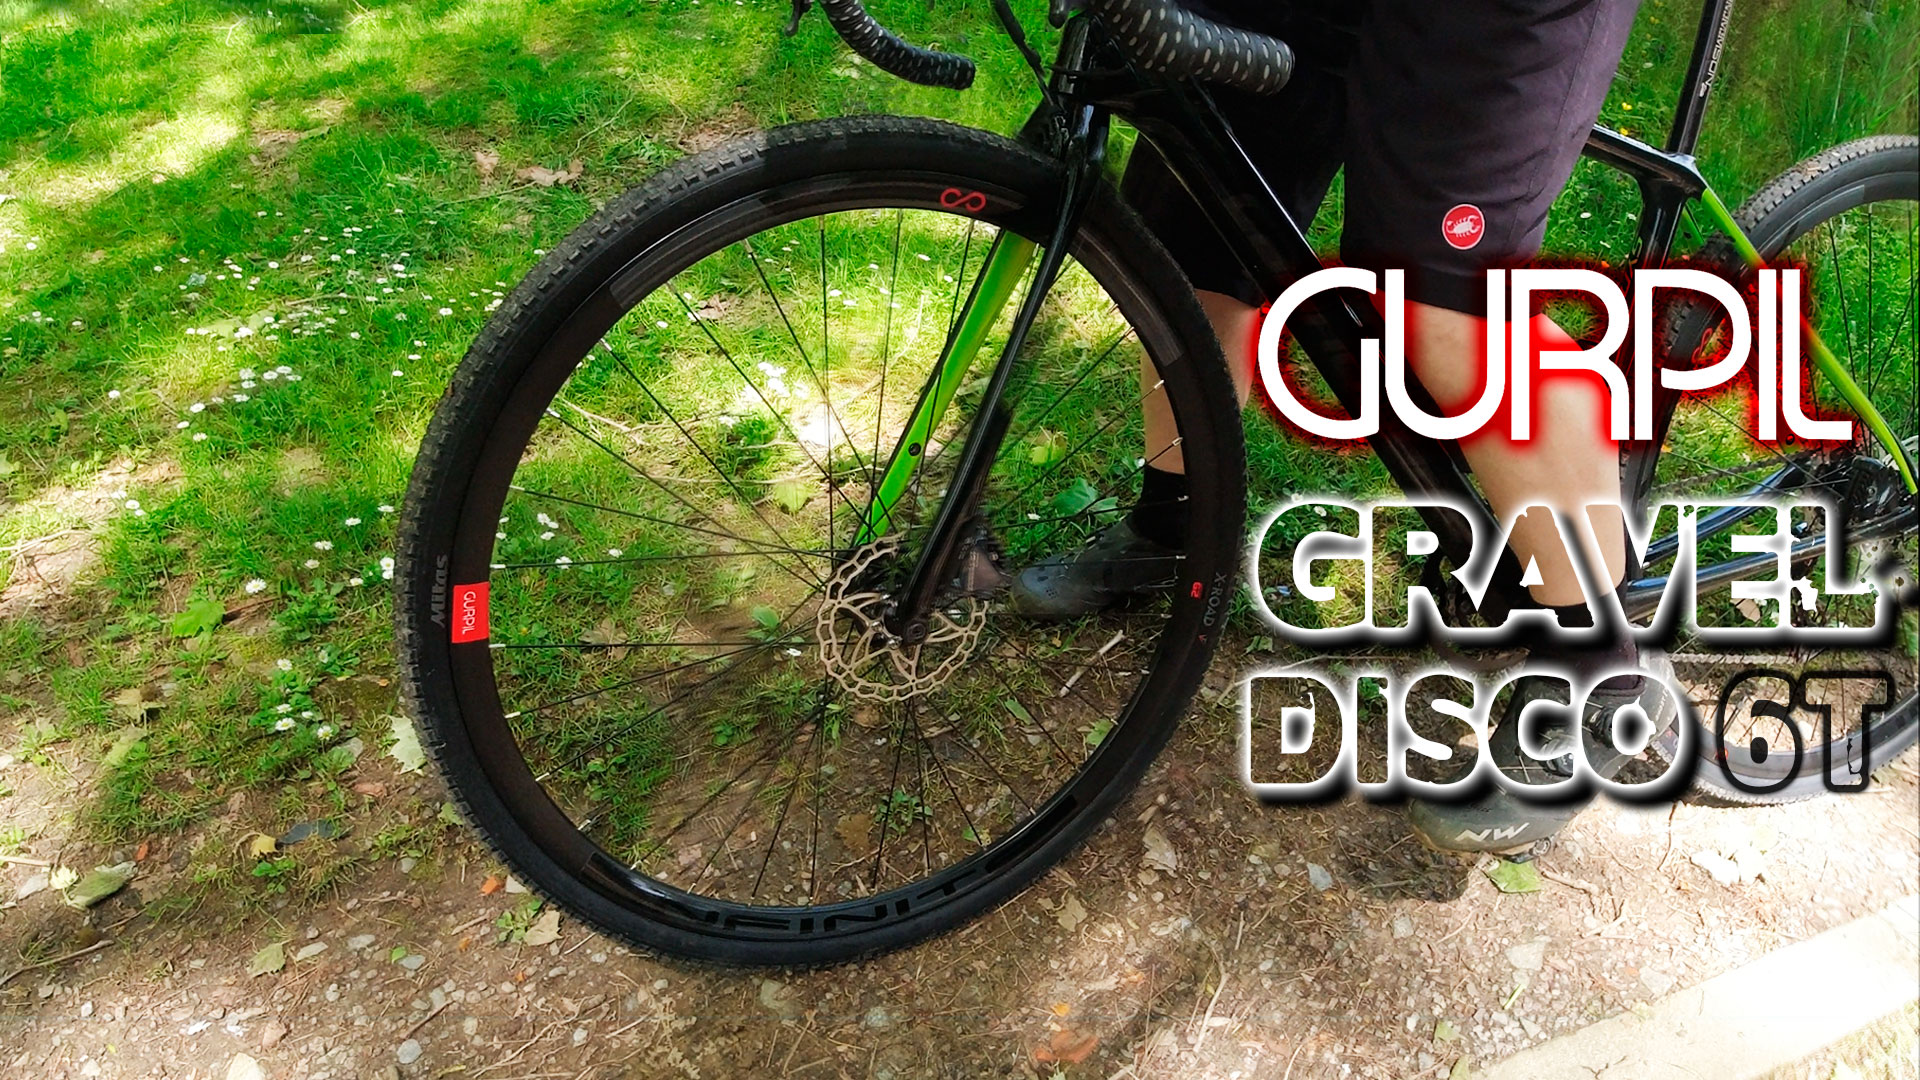 Probamos las nuevas ruedas Gurpil Gravel Disco 6T